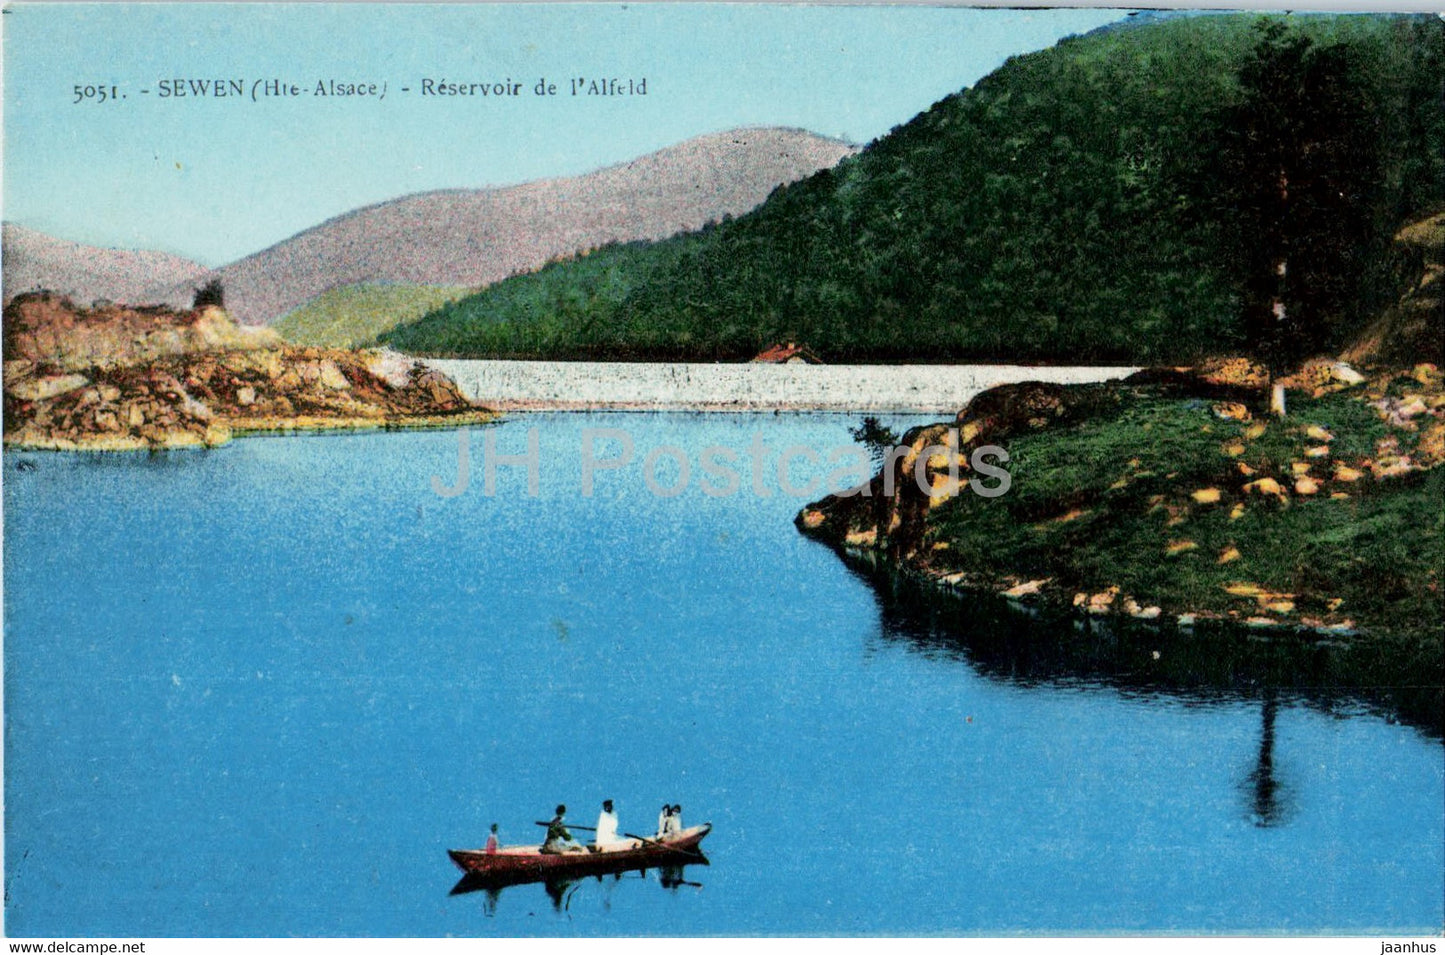 Sewen - Reservoir de l'Alfeld - 5051 - old postcard - France - unused - JH Postcards